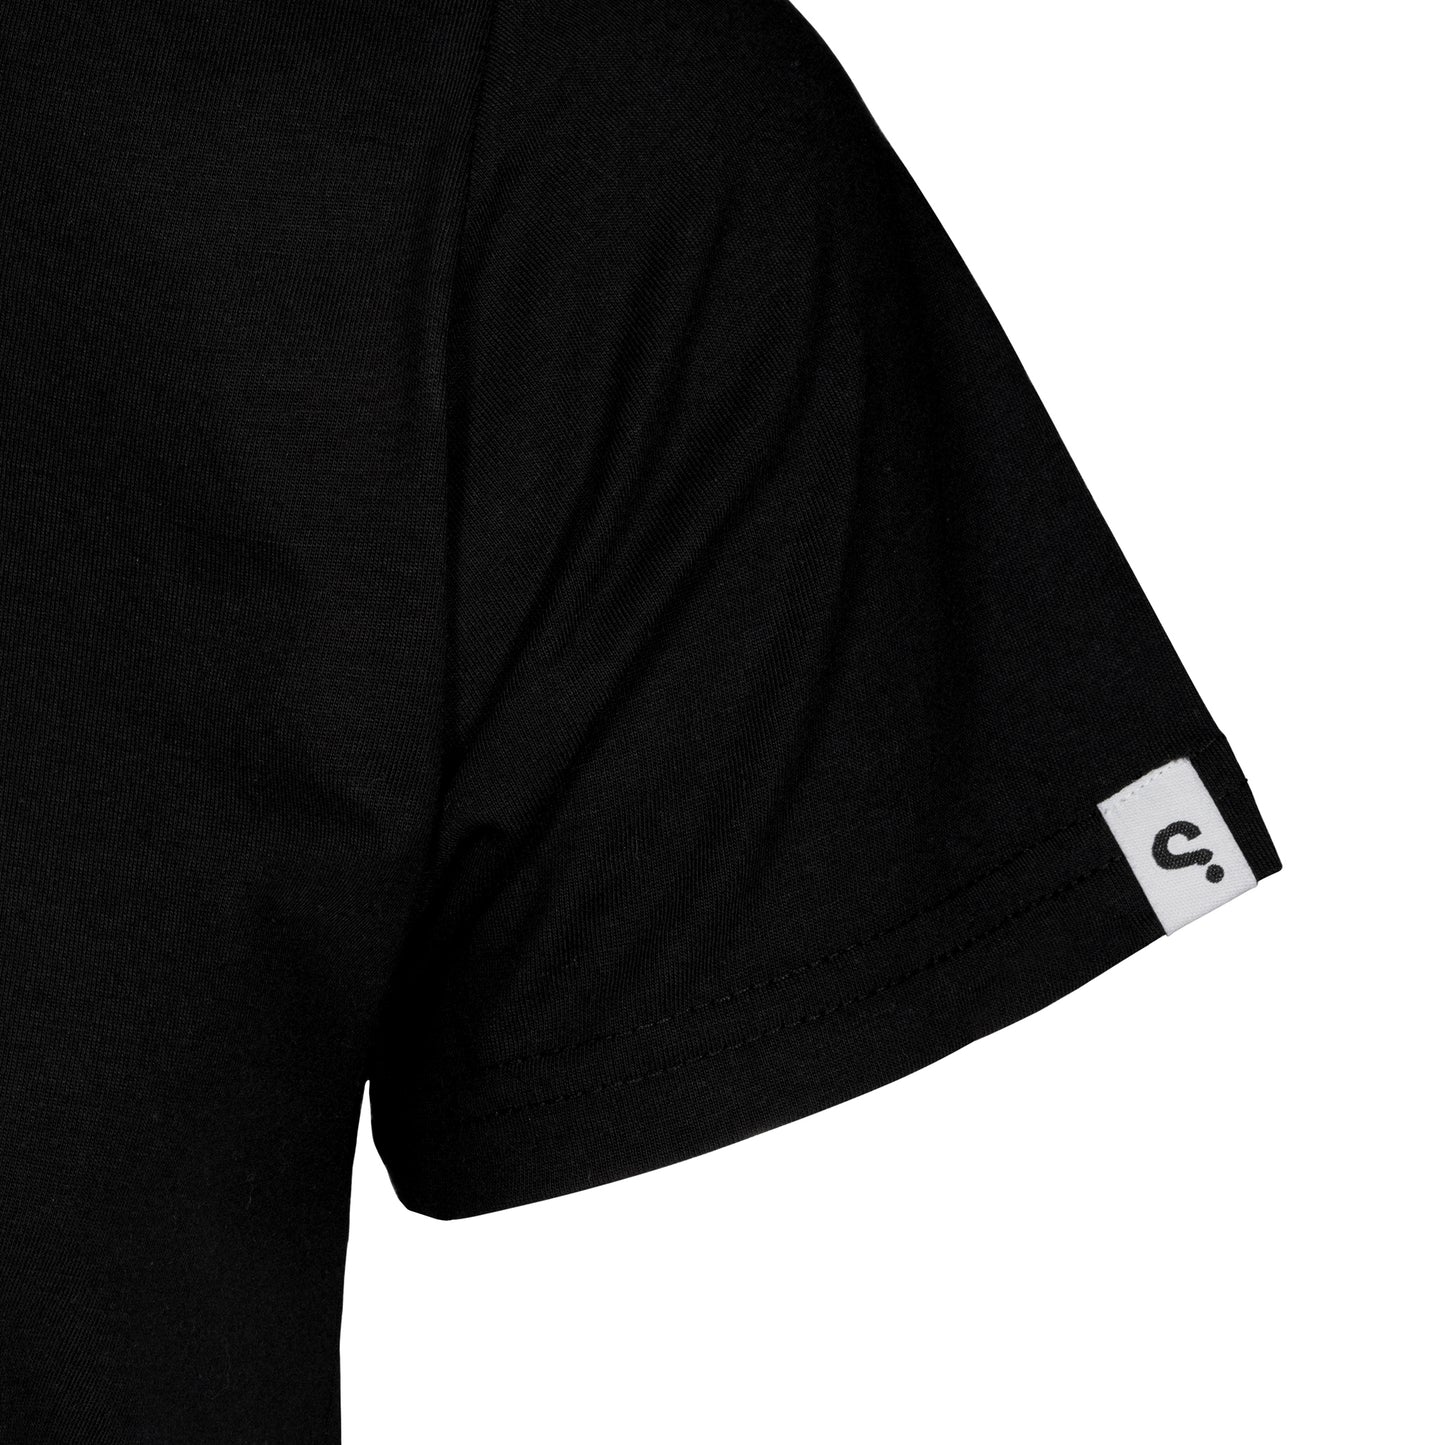 SPYSCAPE Agent Handler T-Shirt with Hidden Zip Pocket - logo sleeve tag